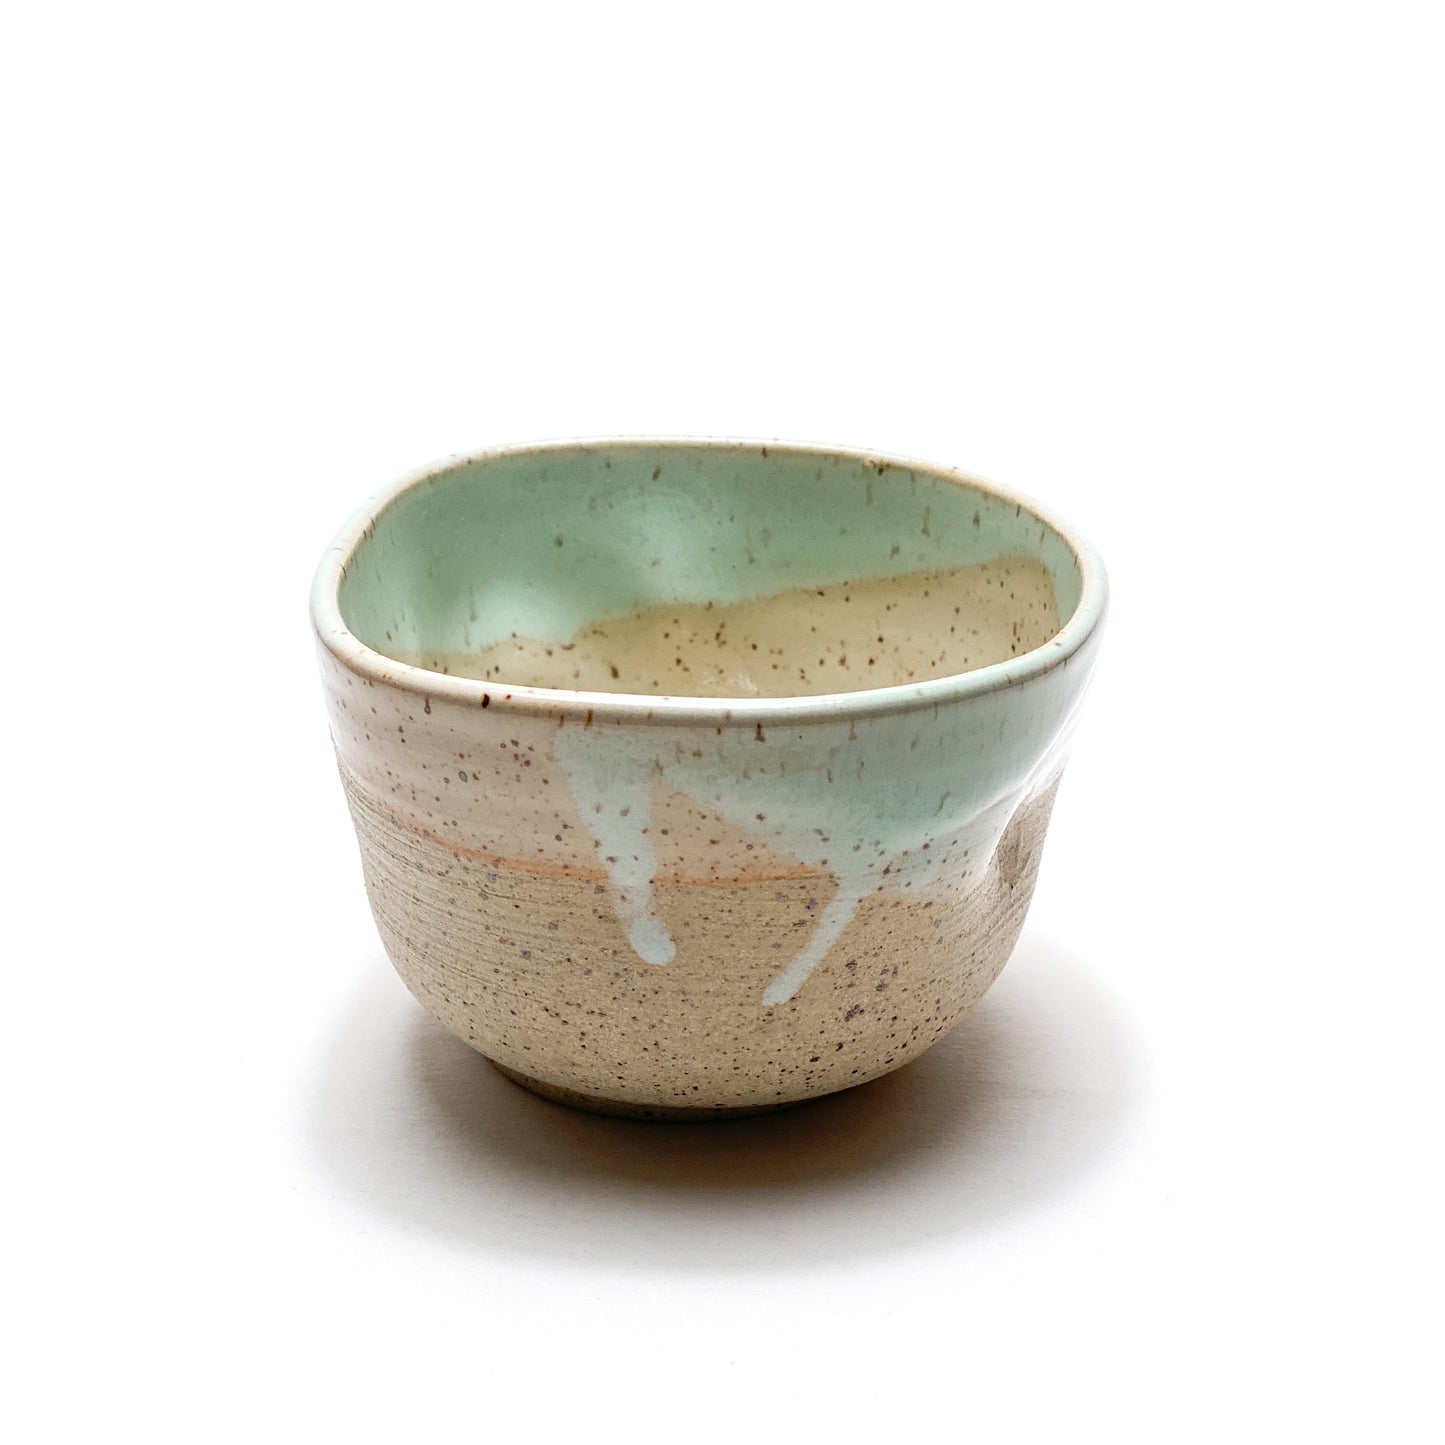 Sydsicle Ceramics Dented Bowl